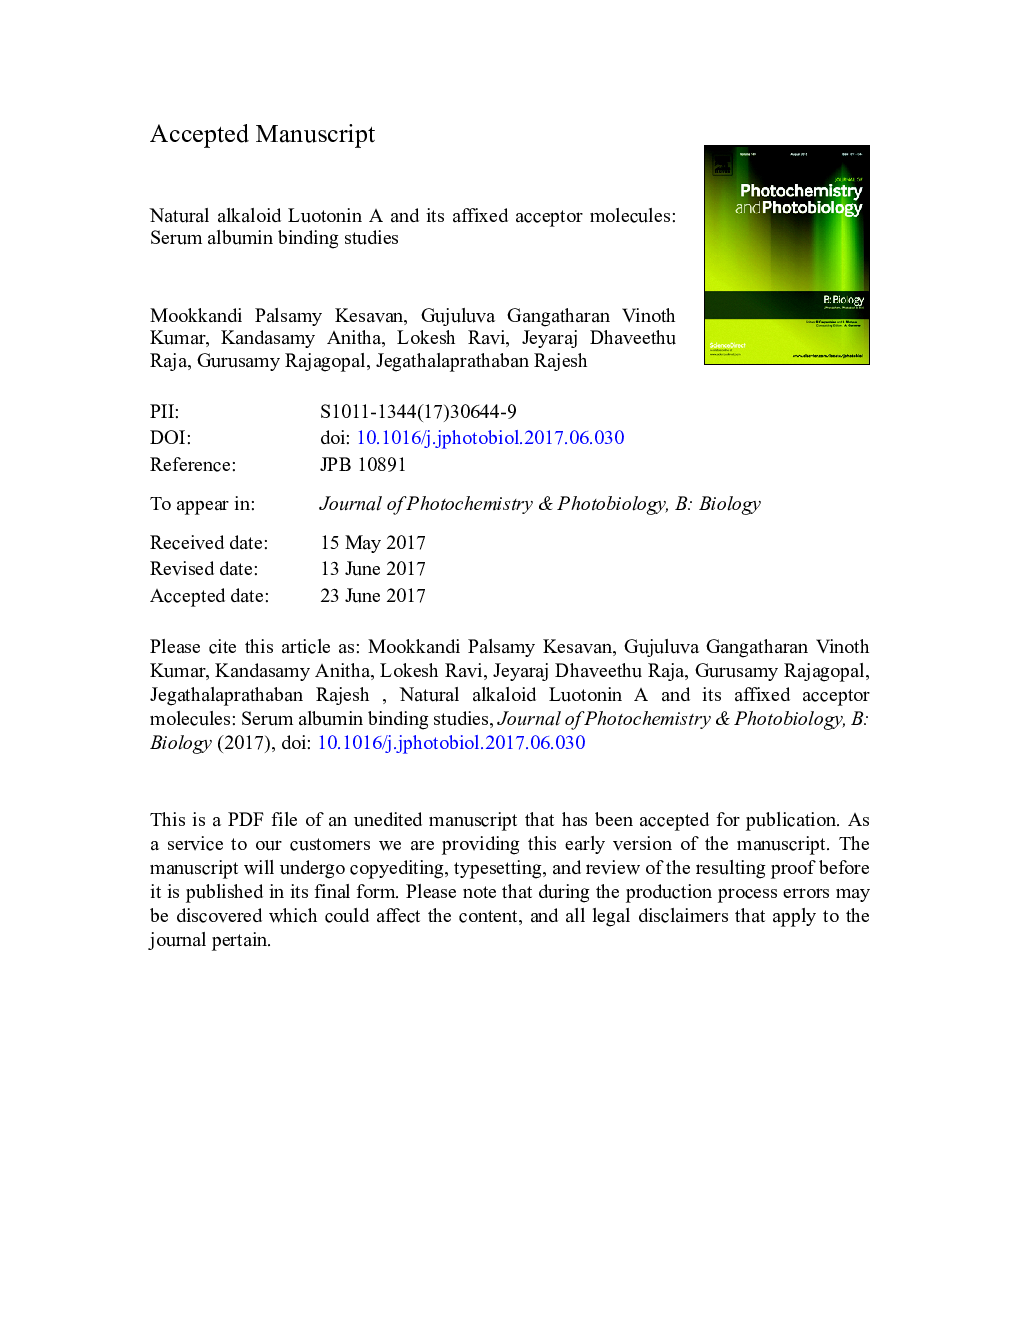 Natural alkaloid Luotonin A and its affixed acceptor molecules: Serum albumin binding studies